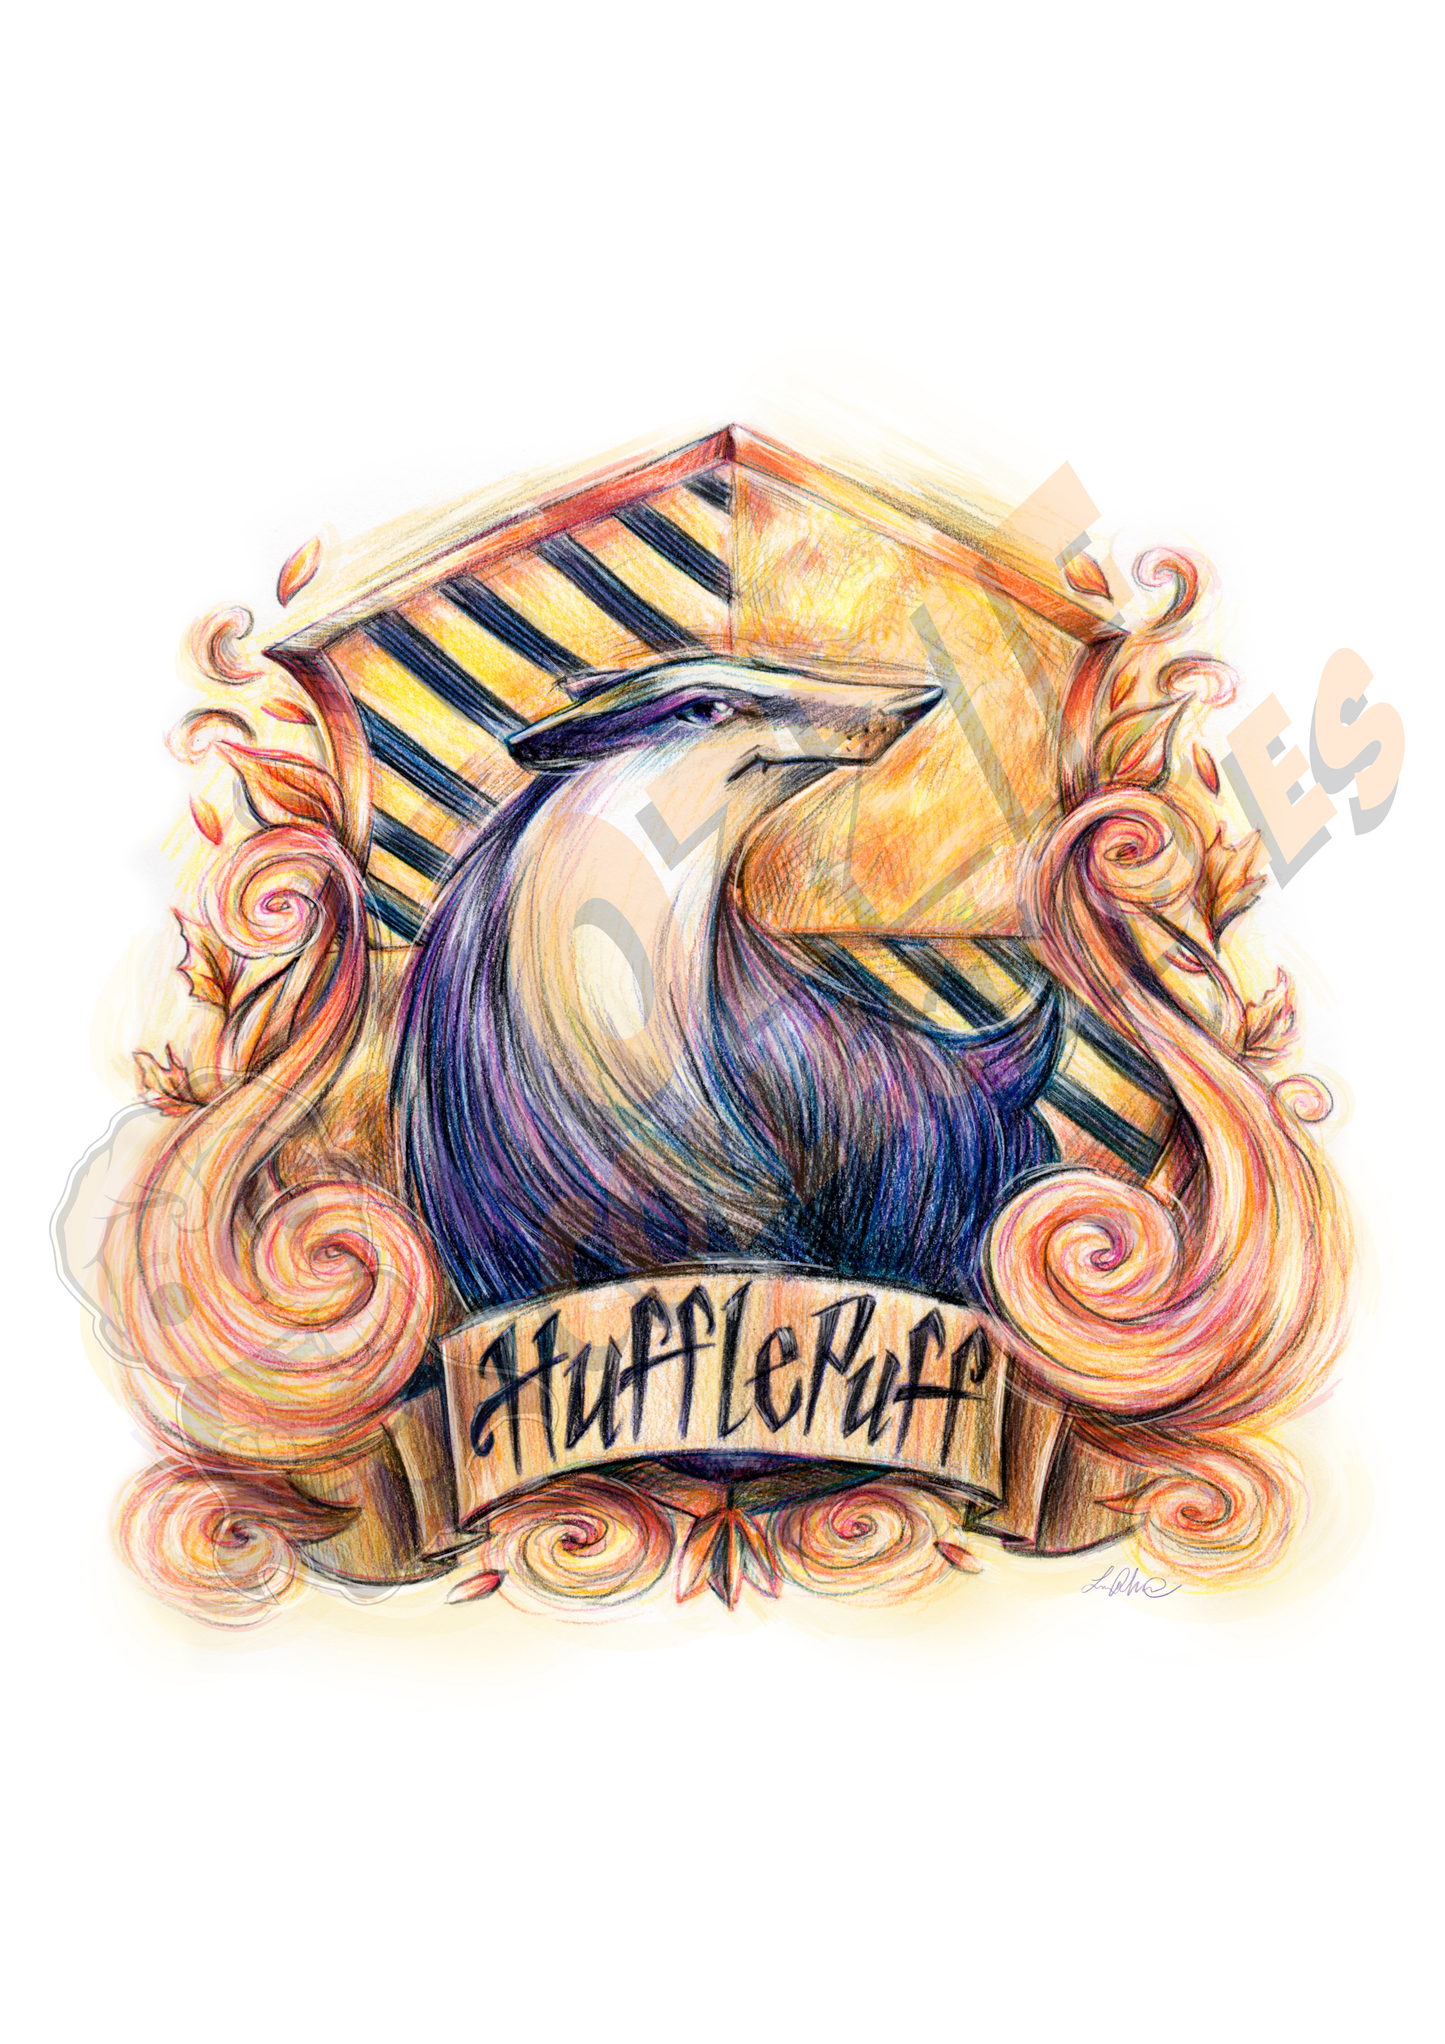 Harry Potter - Hufflepuff House Crest - Lucie Mammone Art Print Poster